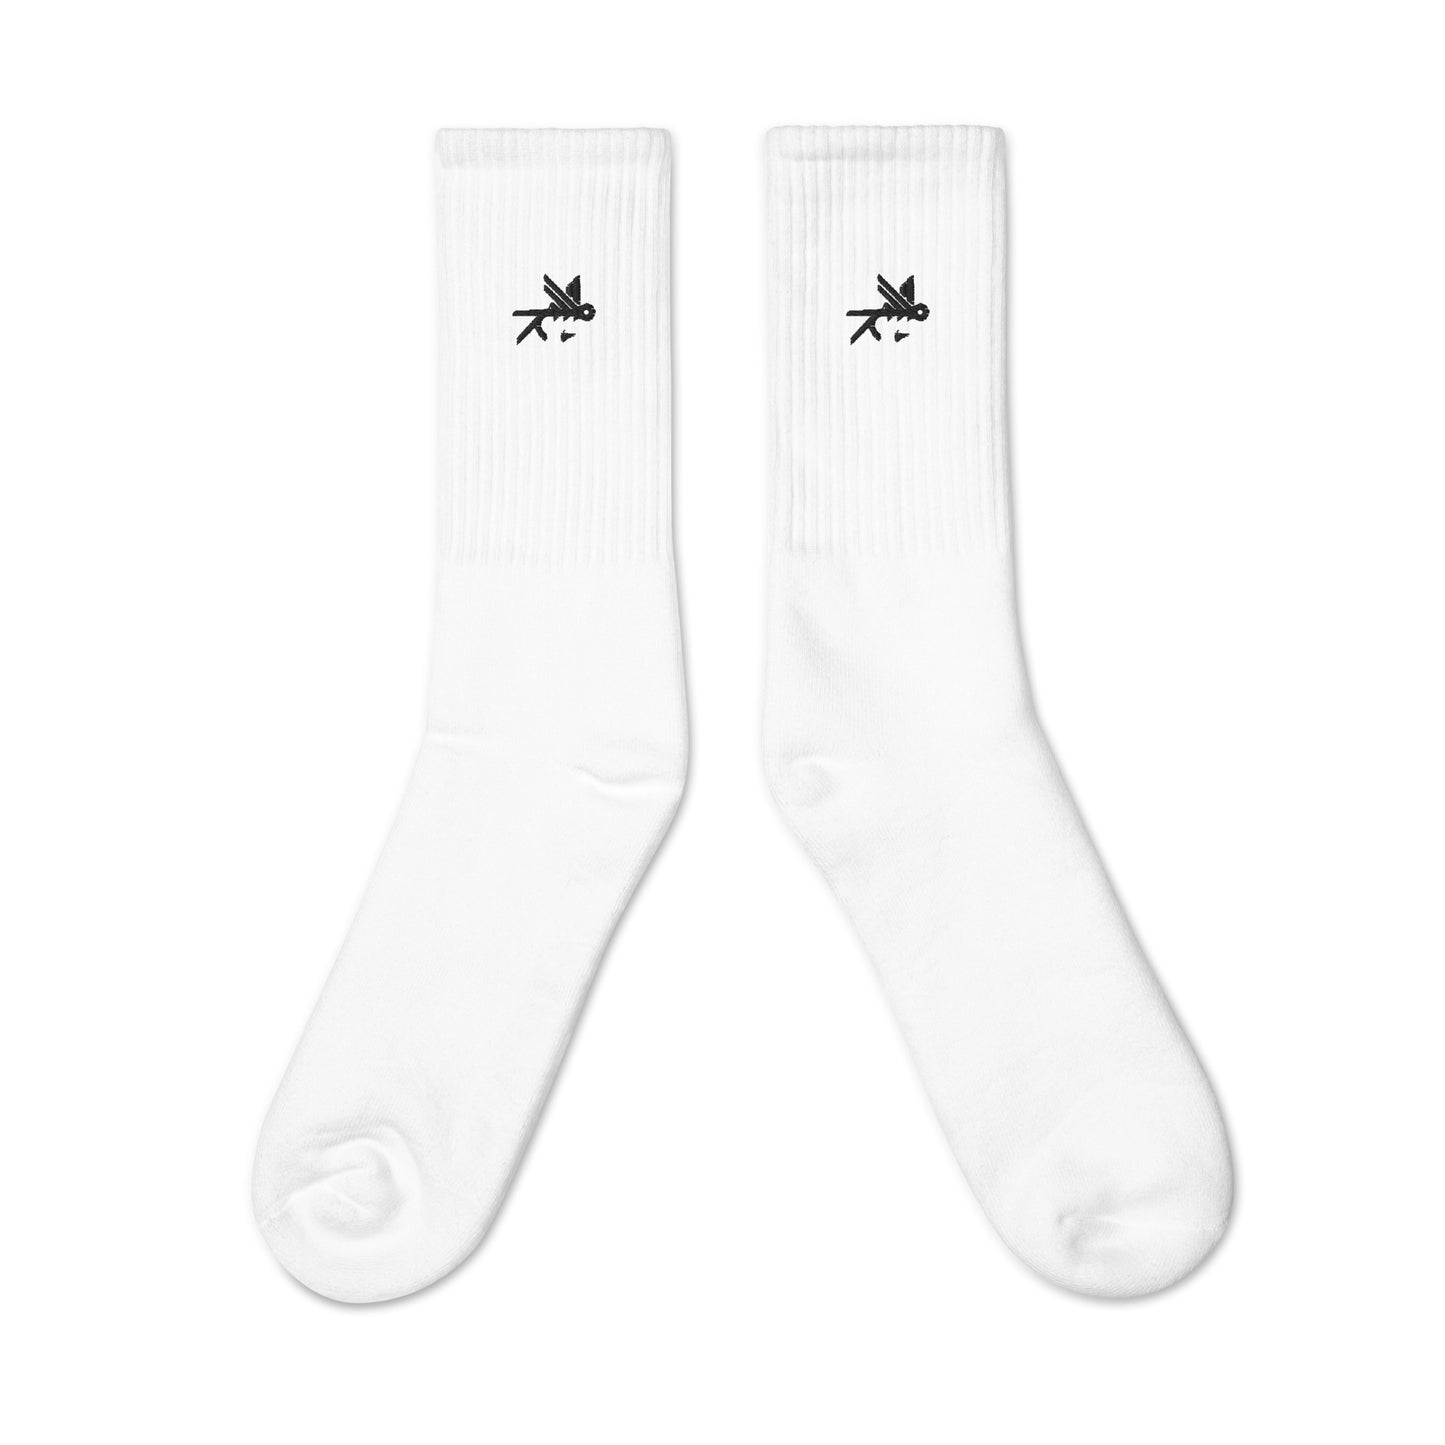 Quick Release socks